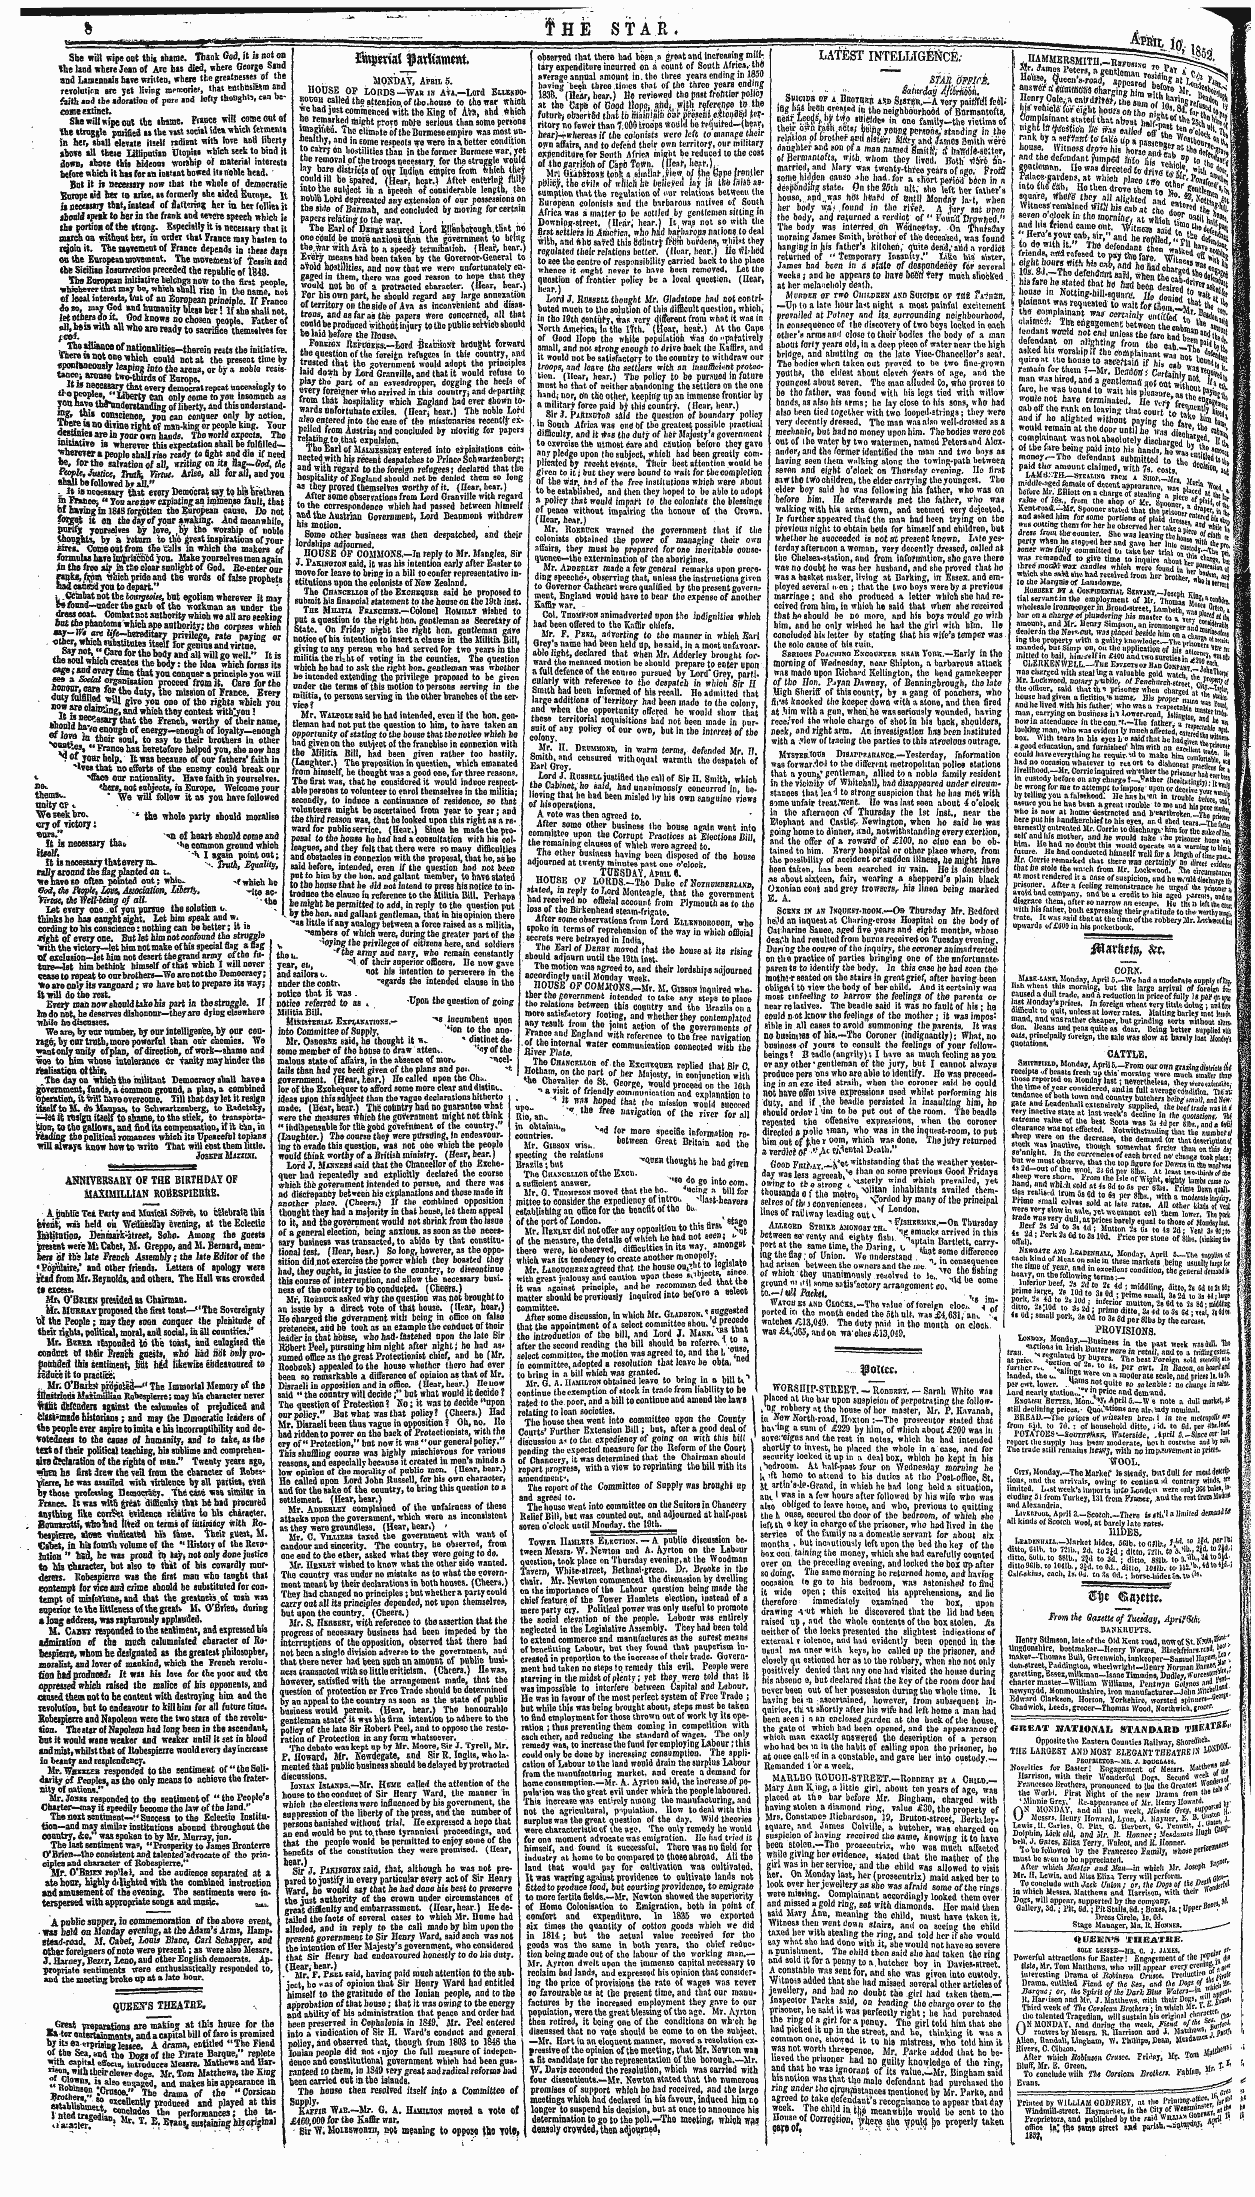 Northern Star (1837-1852): jS F Y, 2nd edition - Elje ©A^Tte.